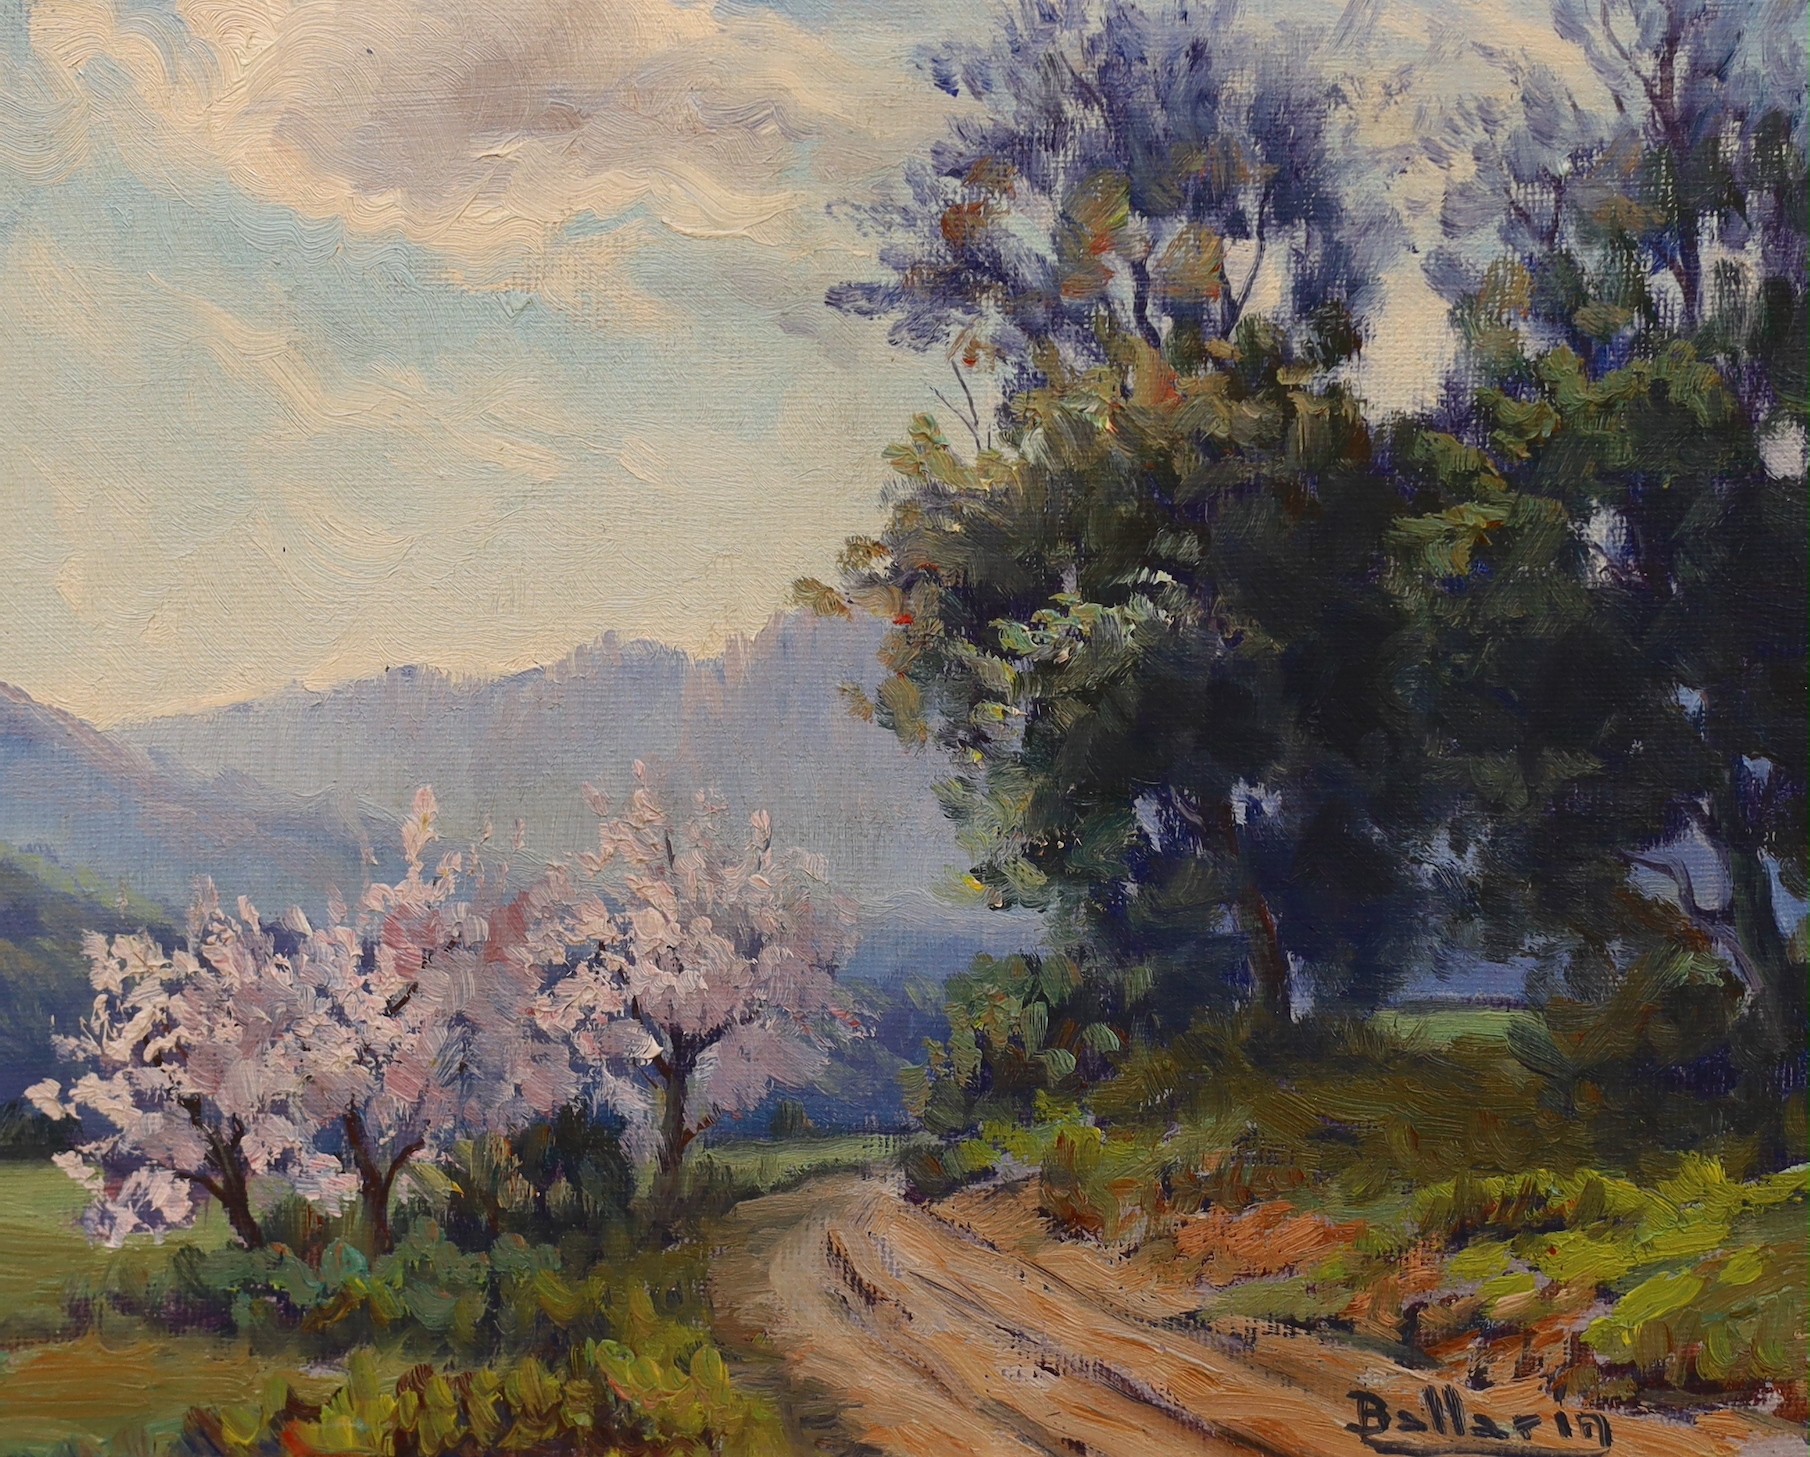 Daniel Grustan Ballarin (1920-2013), oil on canvas, Italian hillside view, signed, 21 x 26cm                                                                                                                                